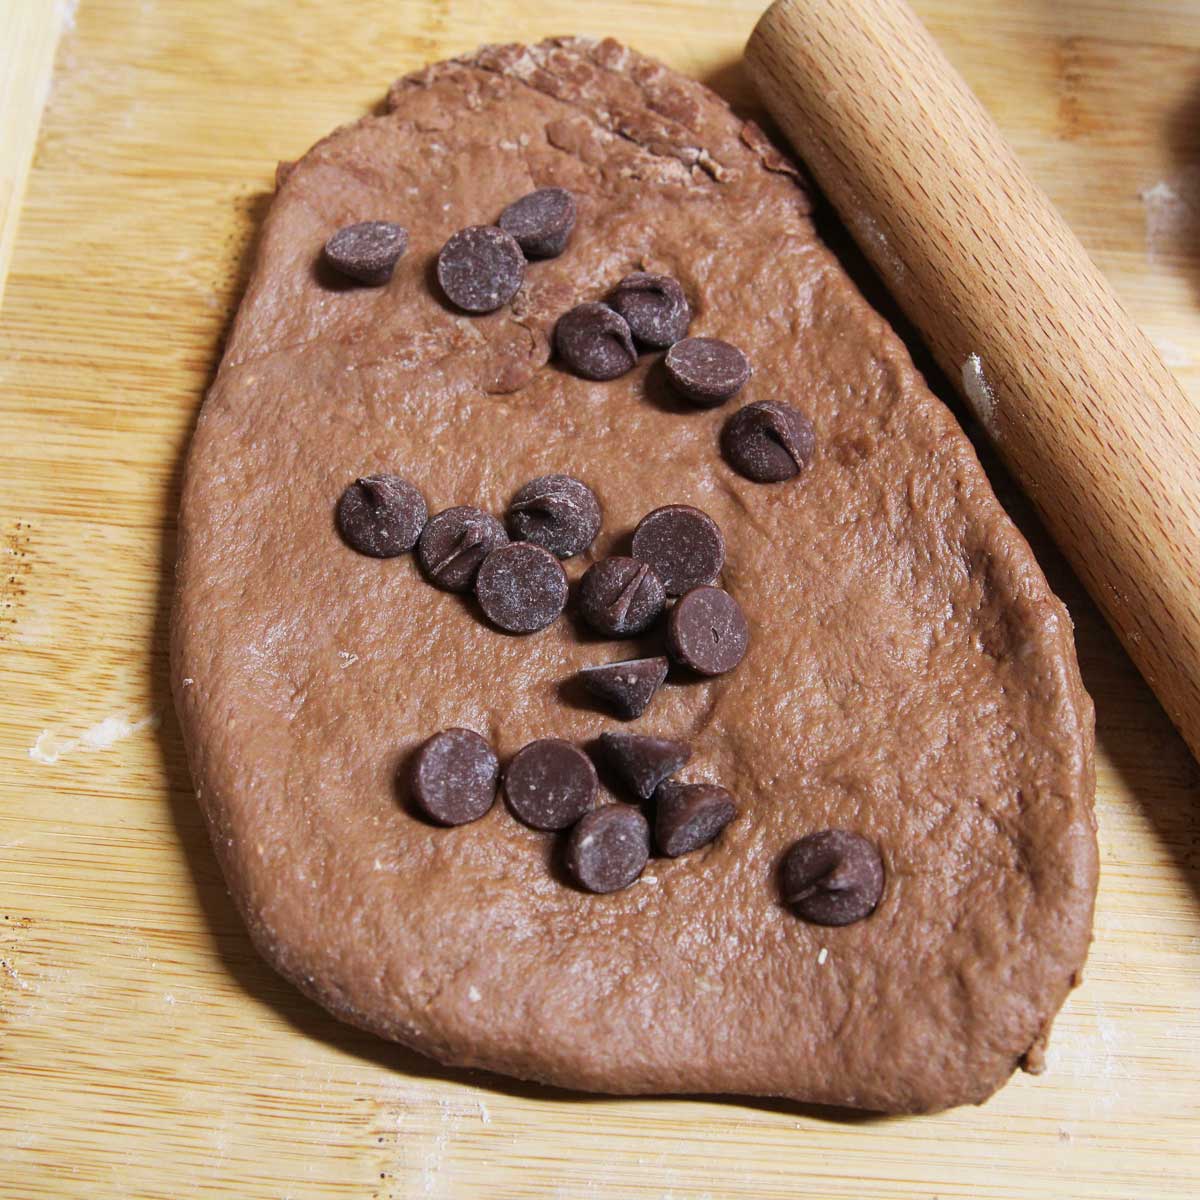 Chocolate Banana Yeast Bread Recipe with Chocolate Chips (Healthy & Vegan) - yeasted banana bread